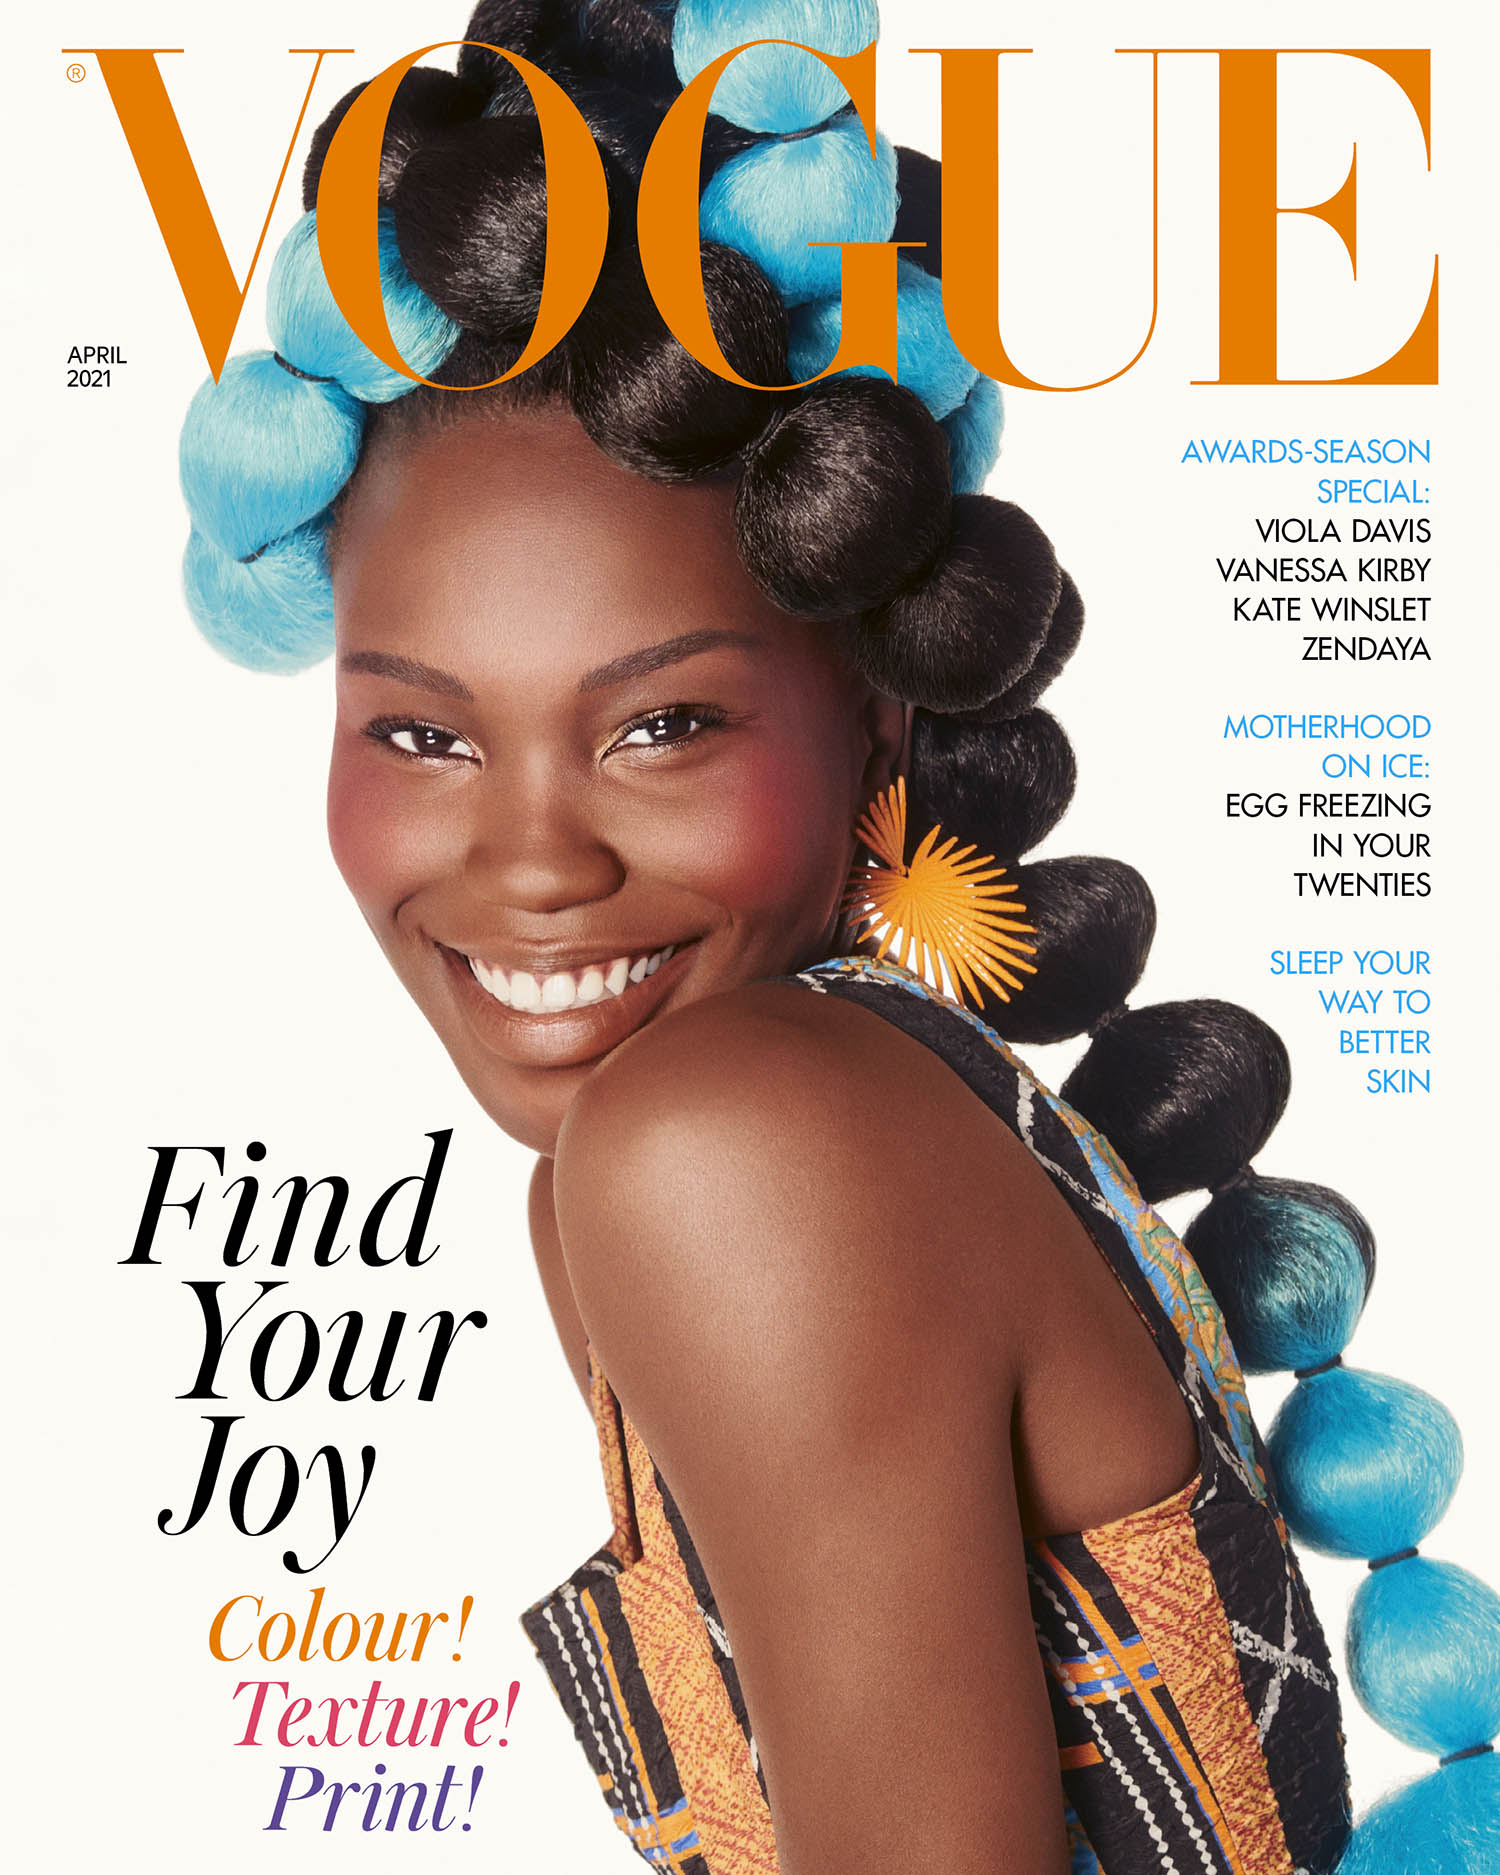 British Vogue April 2021 covers by Steven Meisel